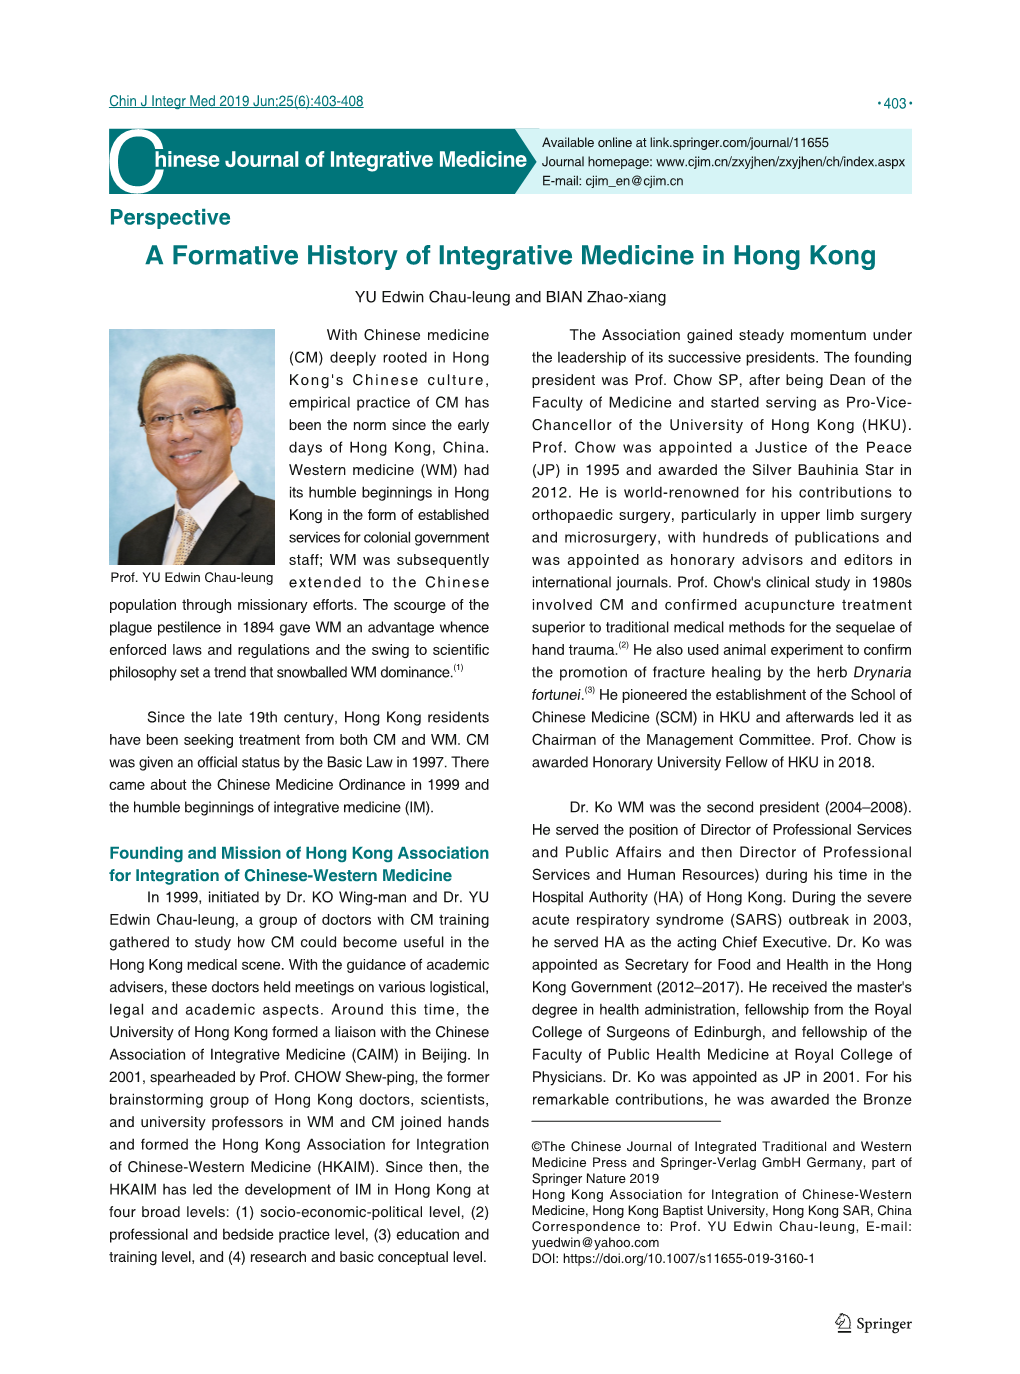 A Formative History of Integrative Medicine in Hong Kong